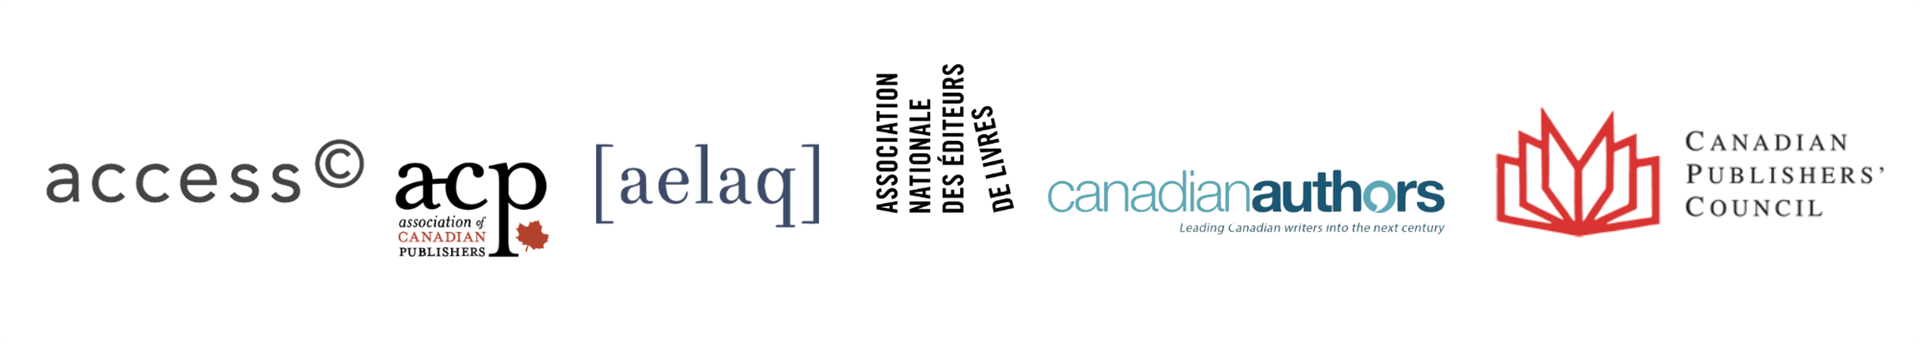 The logos of Access Copyright, the Association of Canadian Publishers, AELAQ, Association Nationale des Editeurs de Livres, Canadian Authors, and Canadian Publishers' Council.